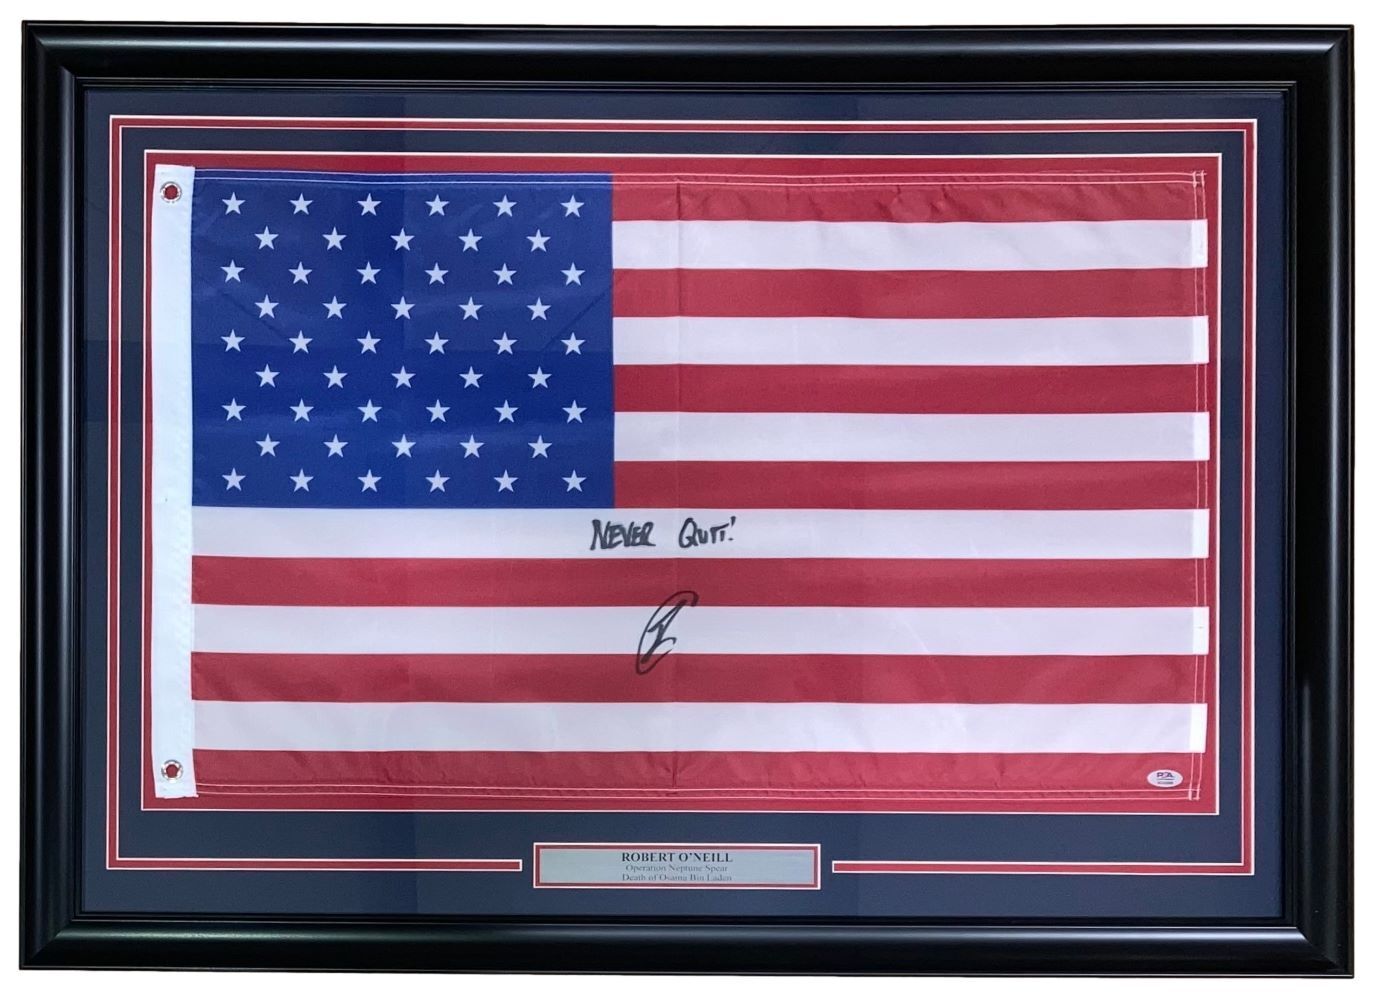 Robert O'Neill Signed Framed American Flag Never Quit Inscribed PSA ITP Hologram